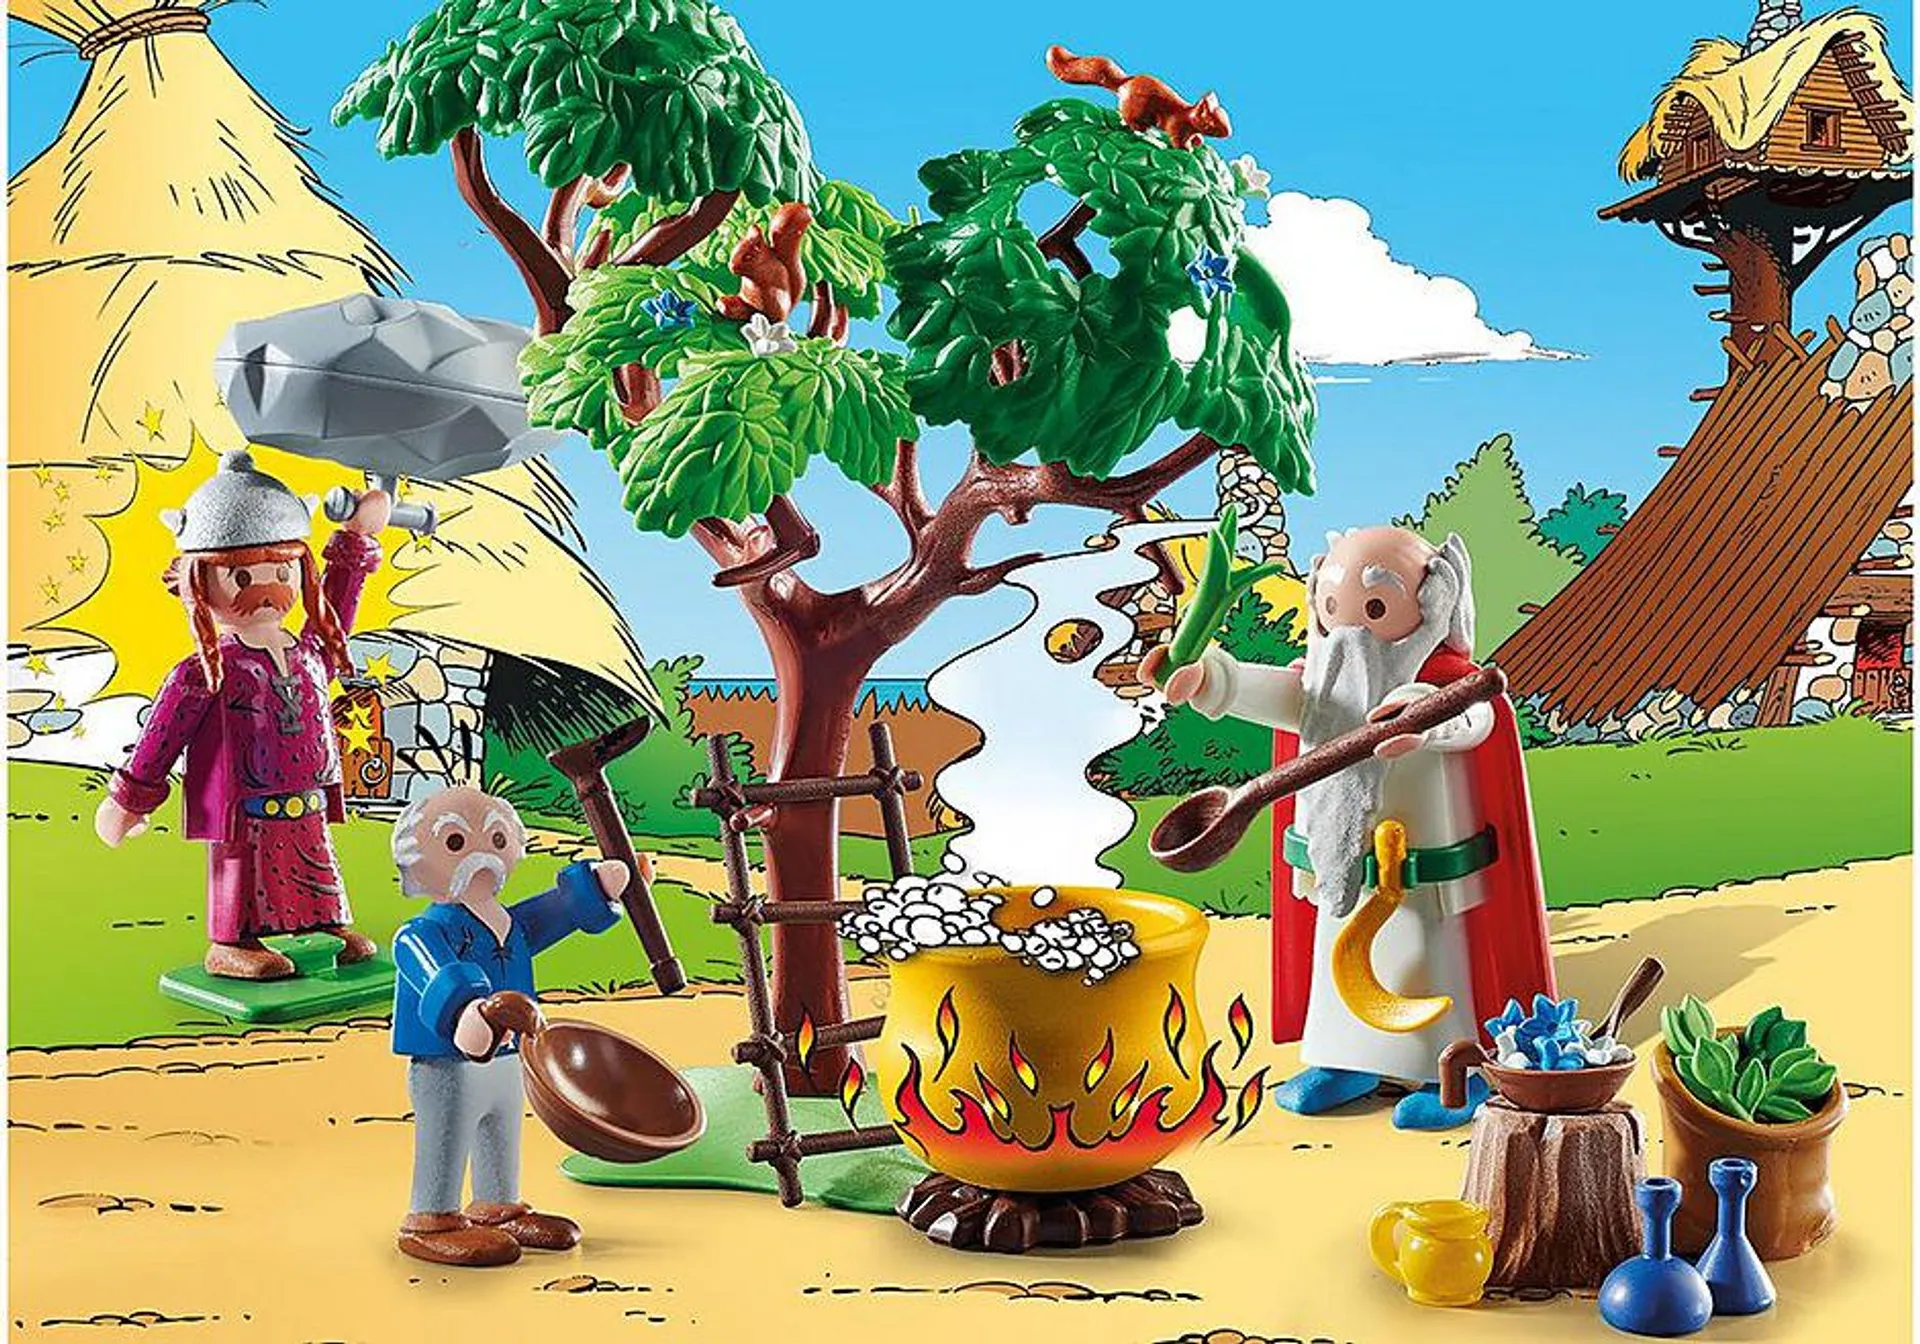 Asterix : Getafix with the caldron of Magic Potion